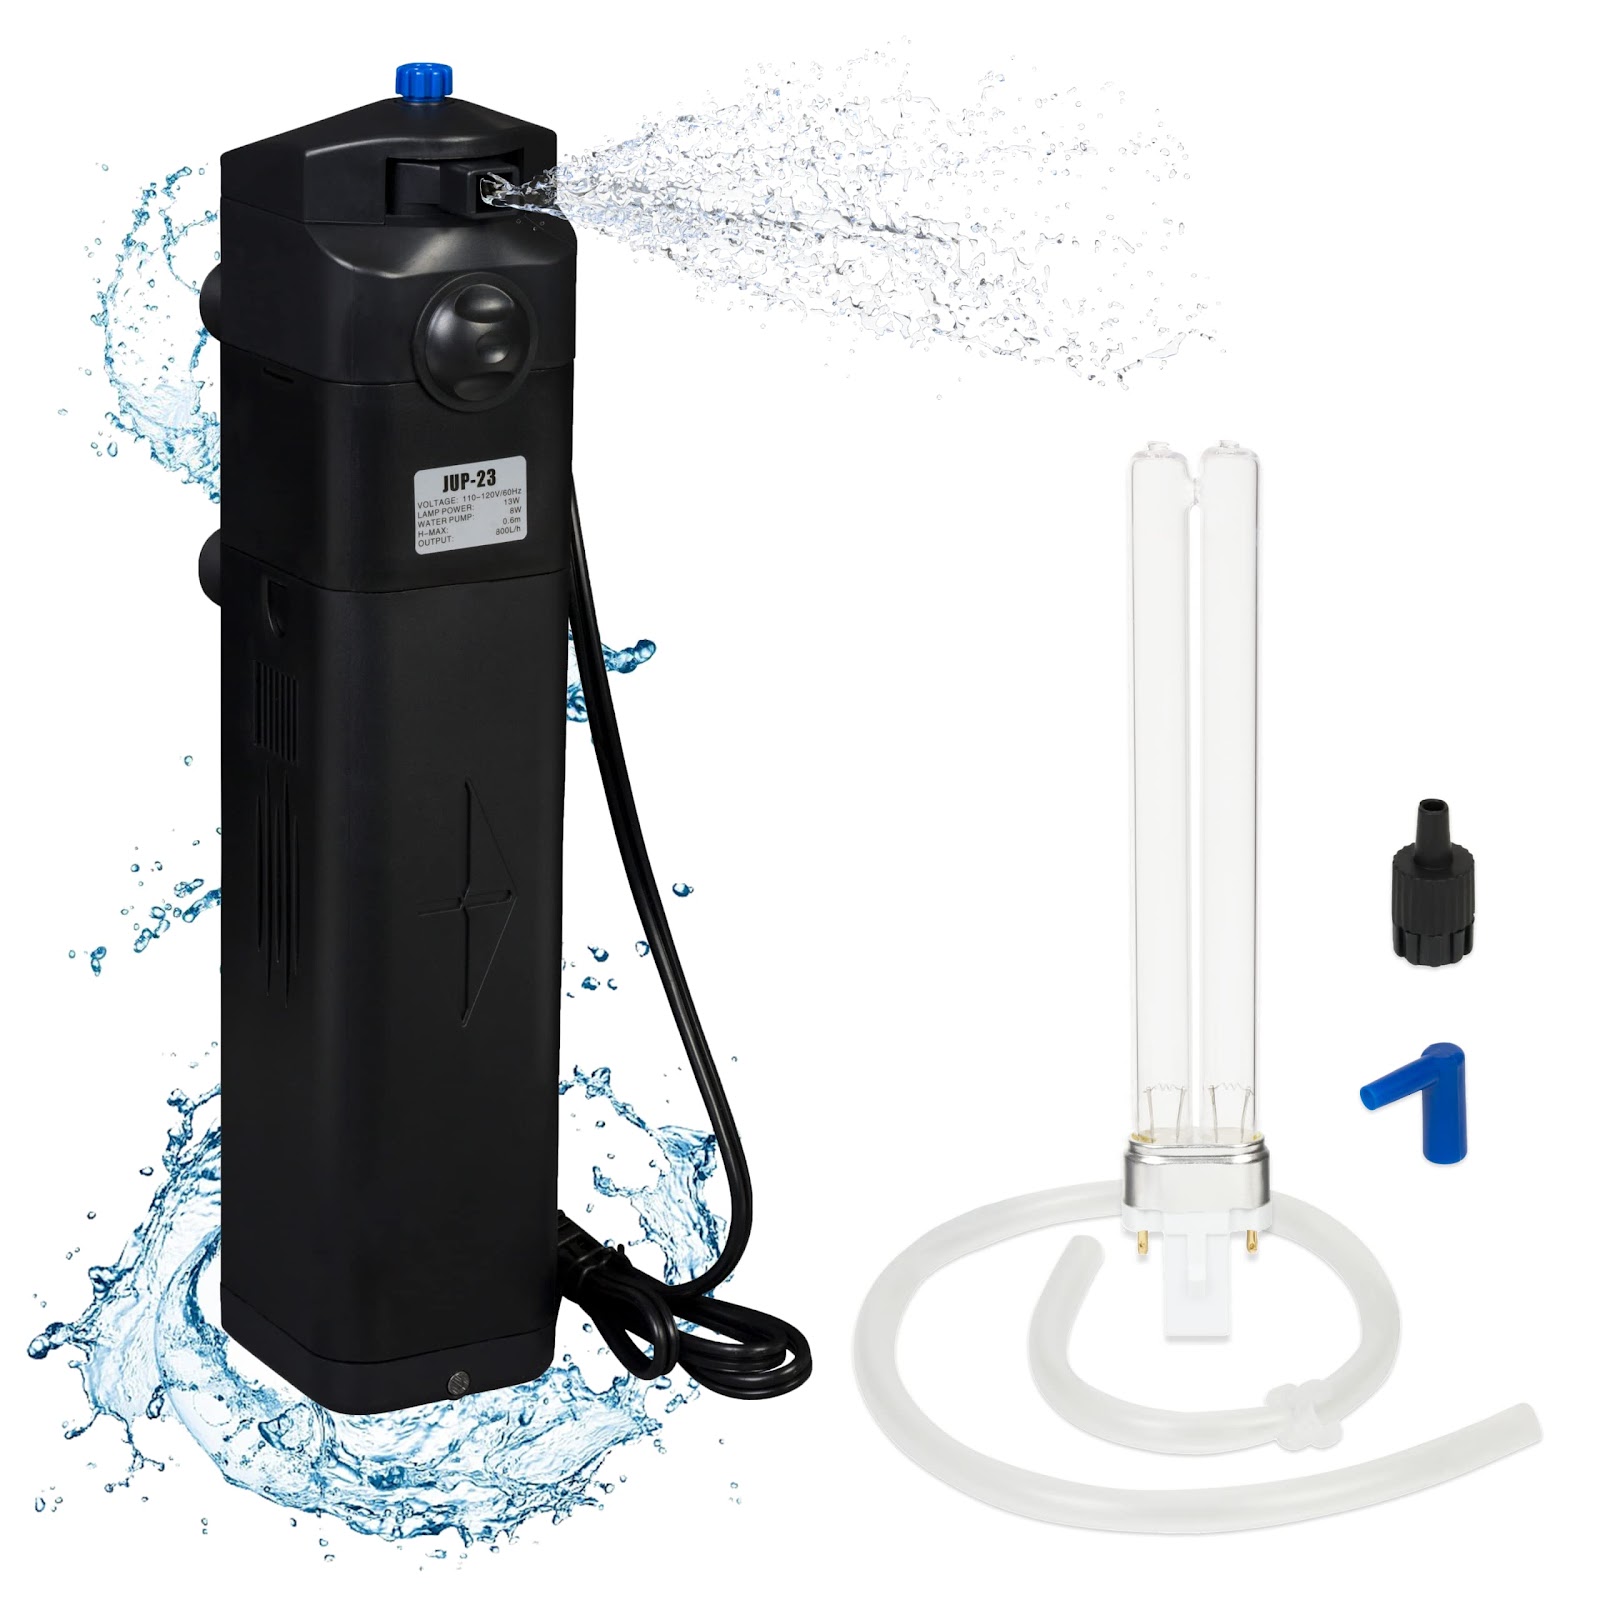 AquaShine JUP-23 Submersible UV Sterilizer